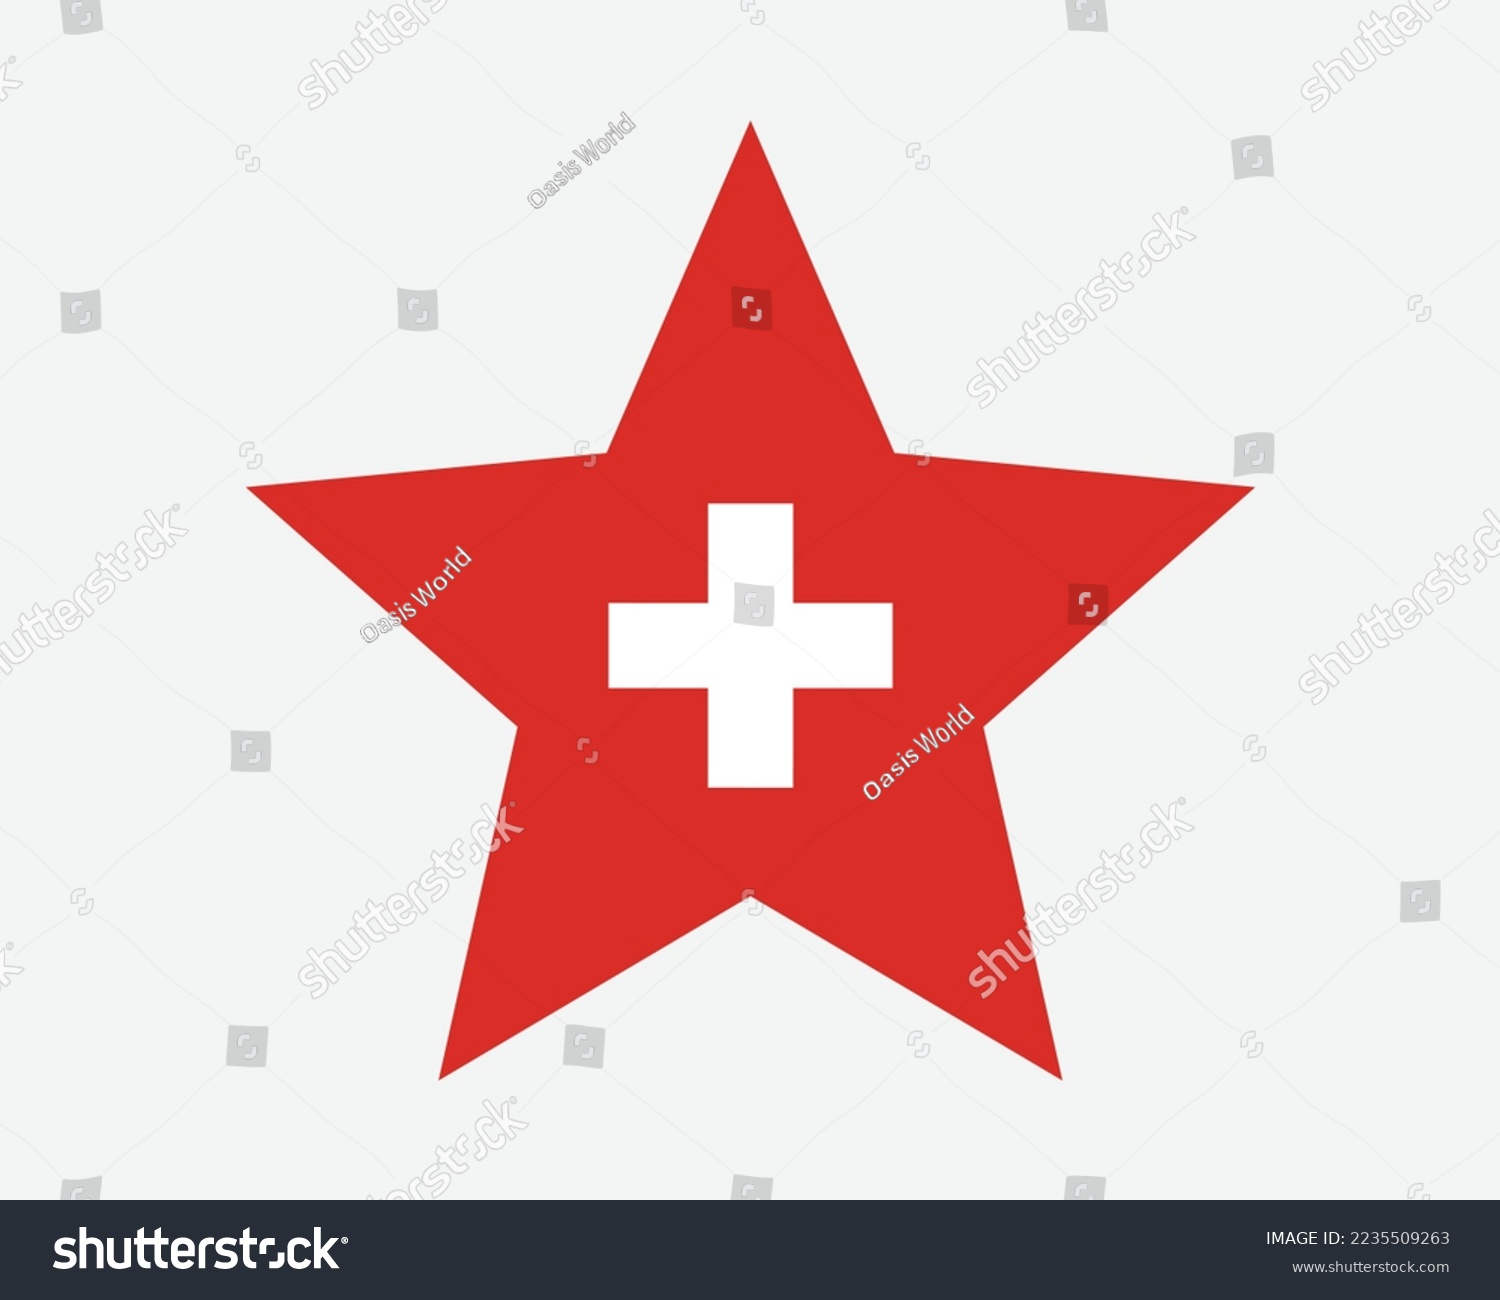 SVG of Switzerland Star Flag. Swiss Confederation Star Shape Flag. Country National Banner Icon Symbol Vector Flat Artwork Graphic Illustration svg